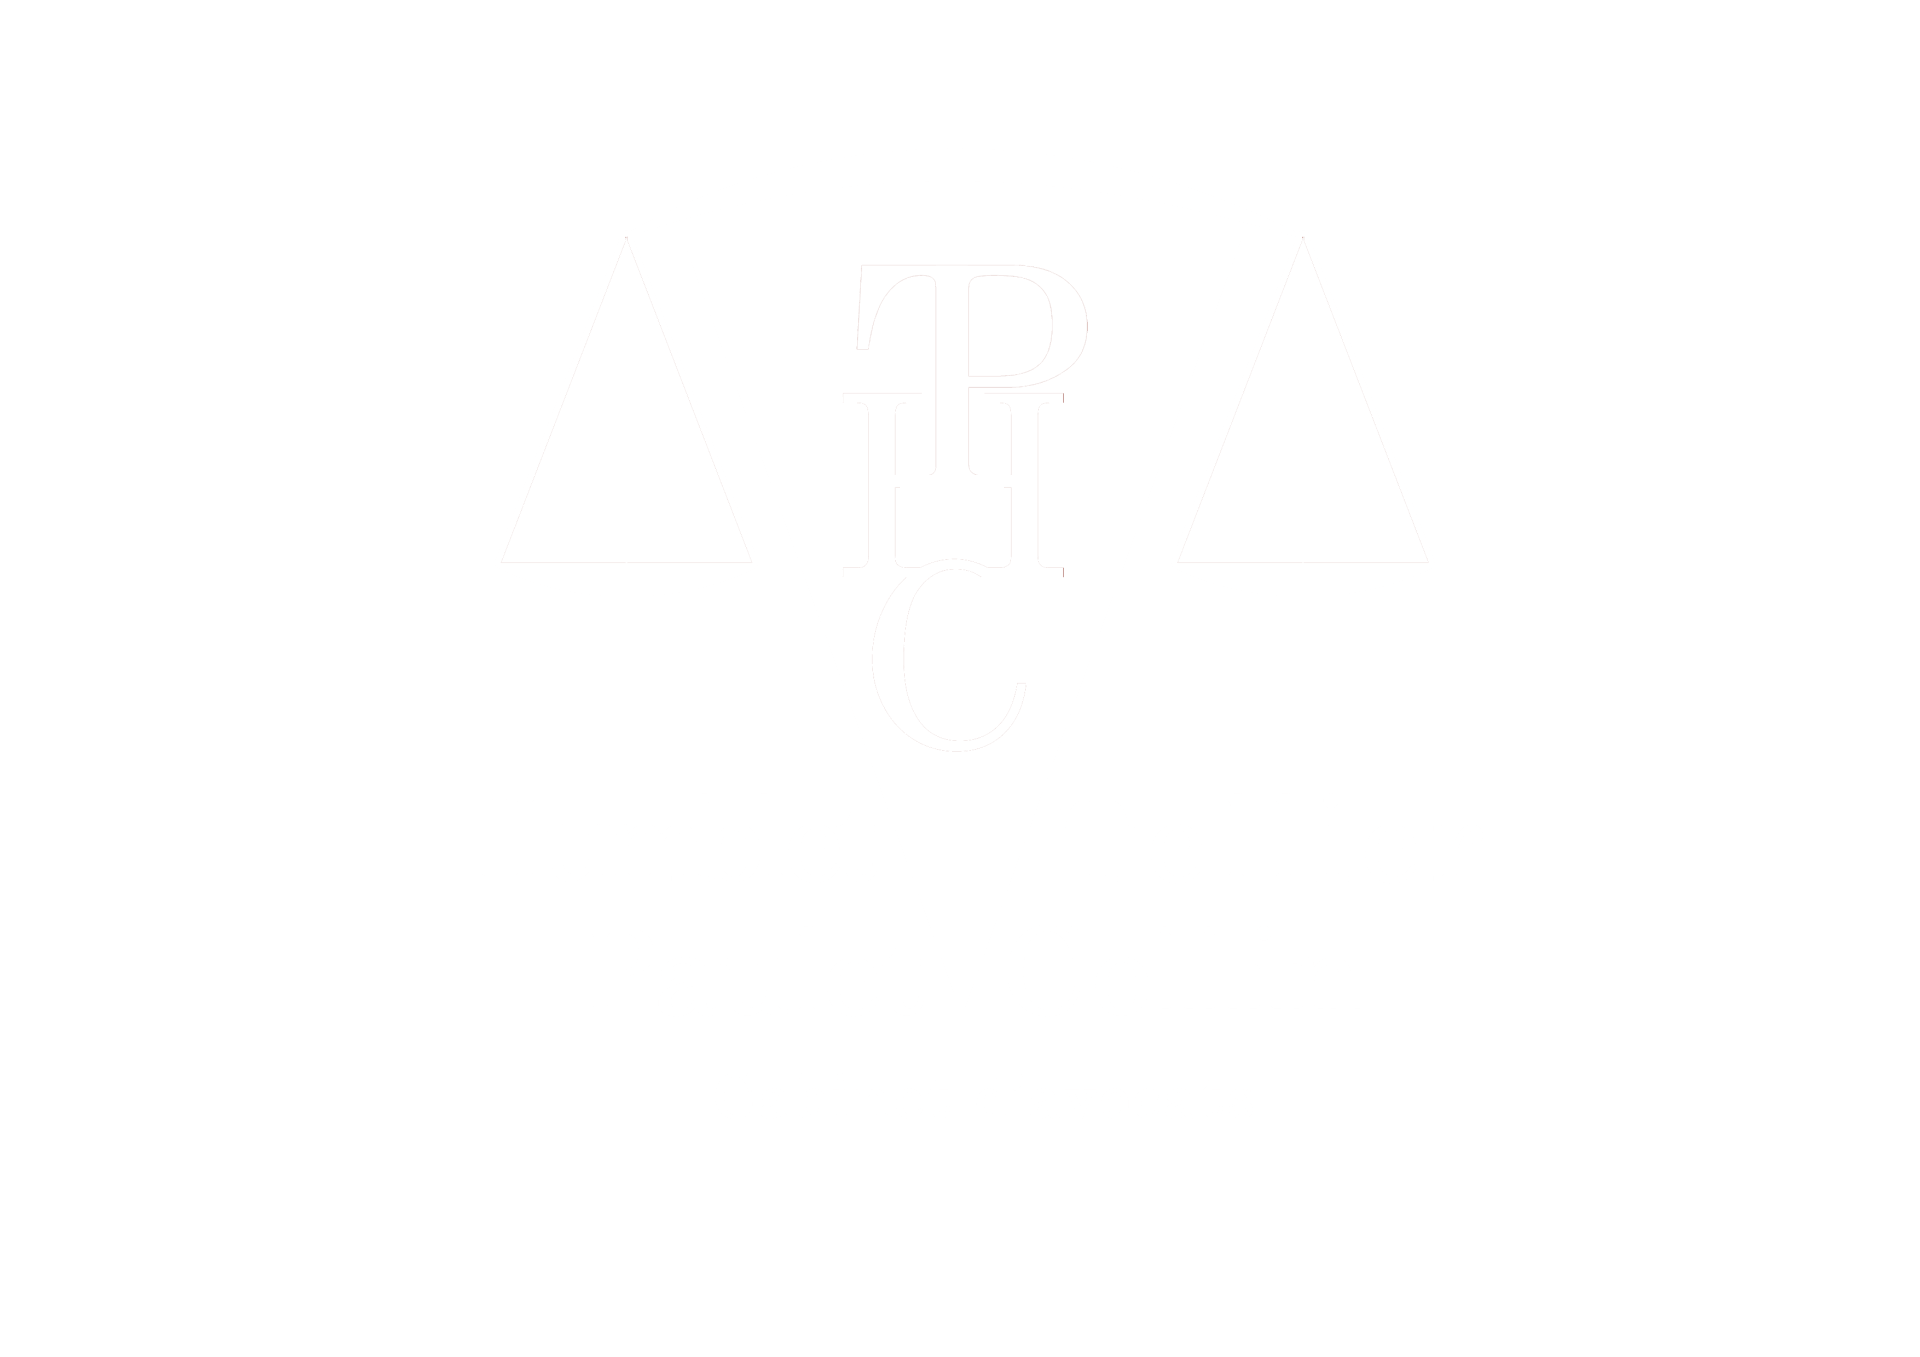 HTPC - avocat de namur